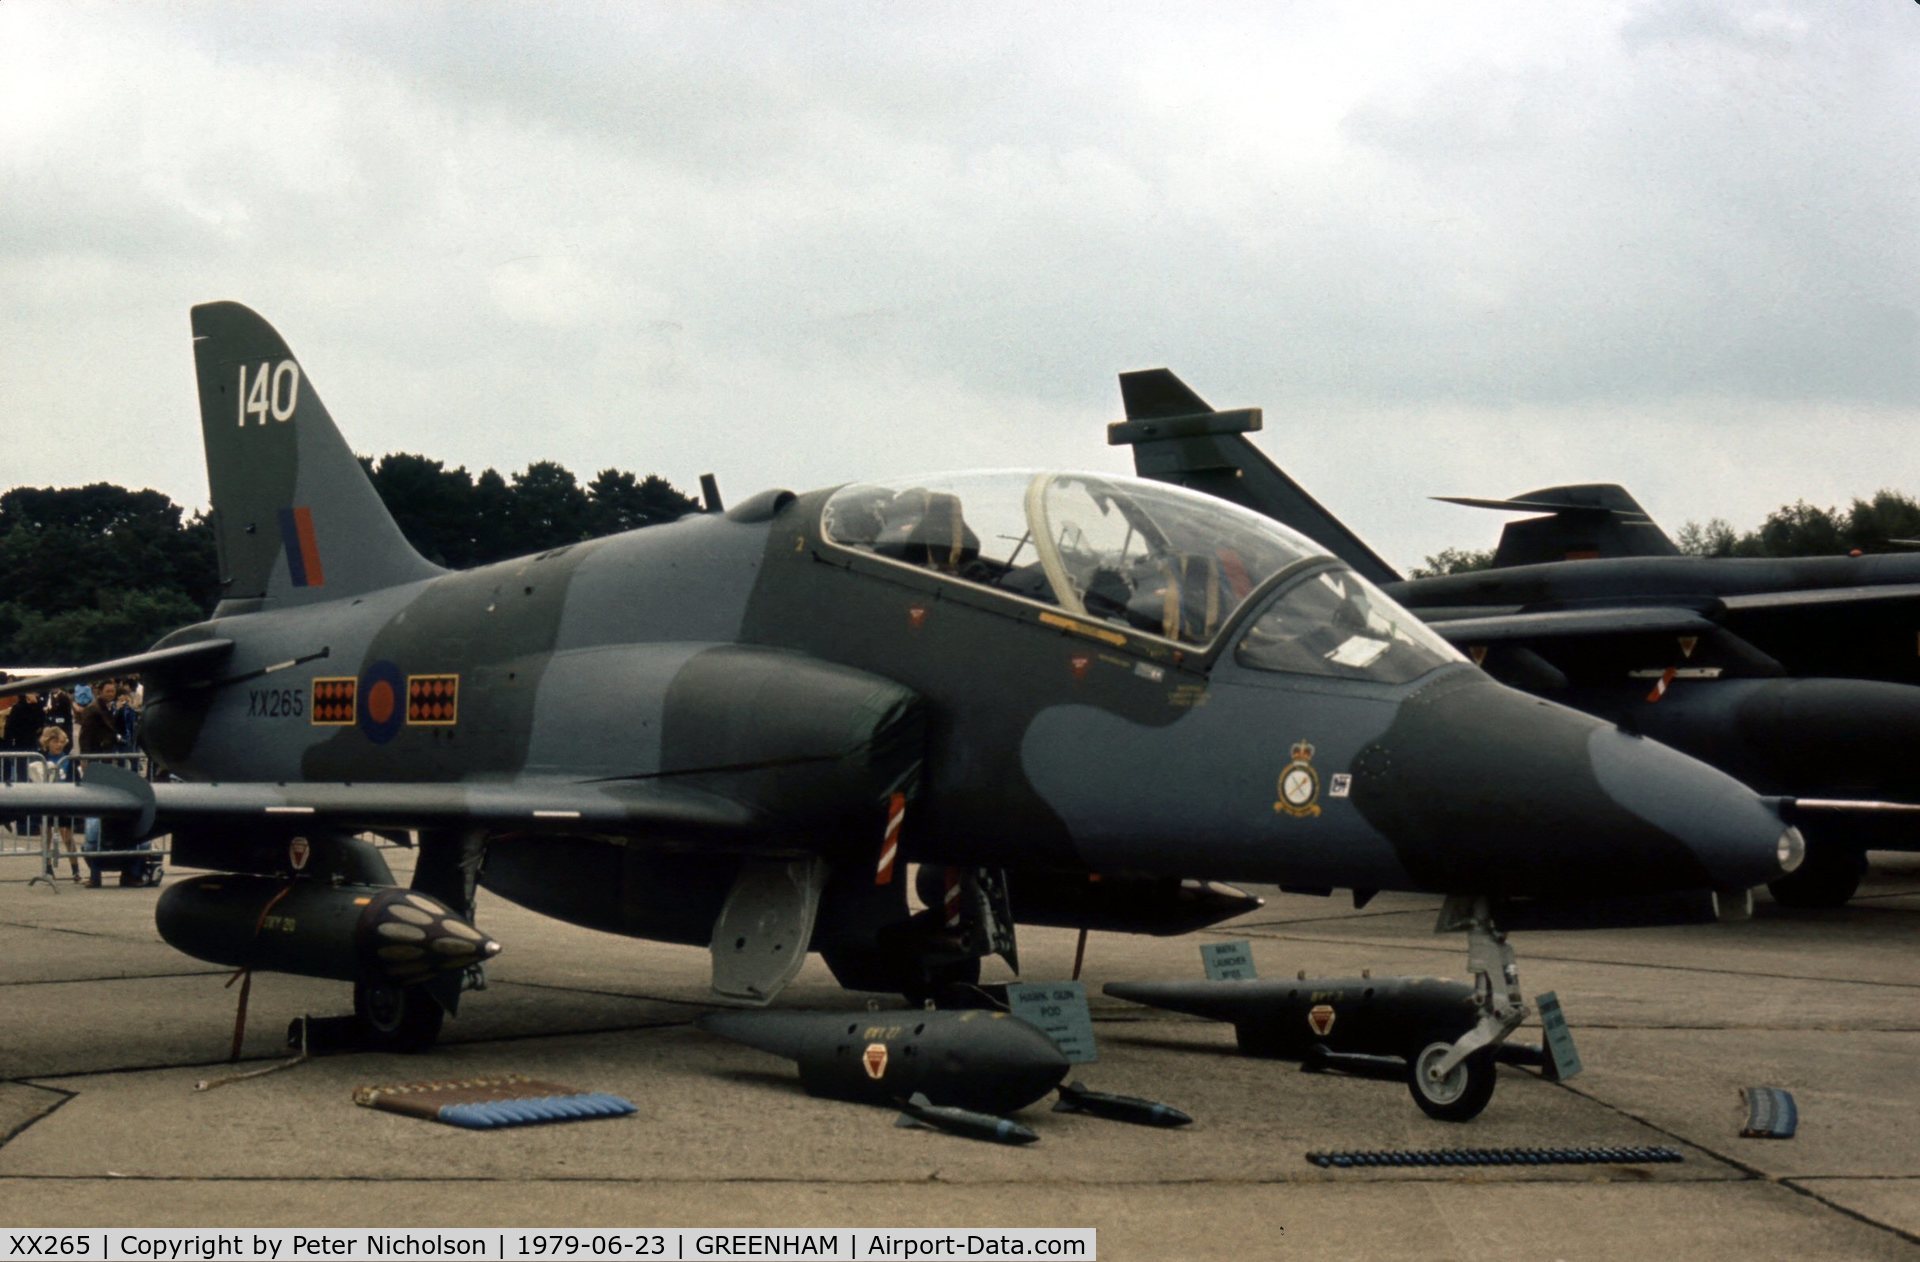 XX265, 1979 Hawker Siddeley Hawk T.1 C/N 101/312101, Hawk T.1 of 234 Squadron/1 Tactical Weapons Unit on display at the 1979 Intnl Air Tattoo at RAF Greenham Common.